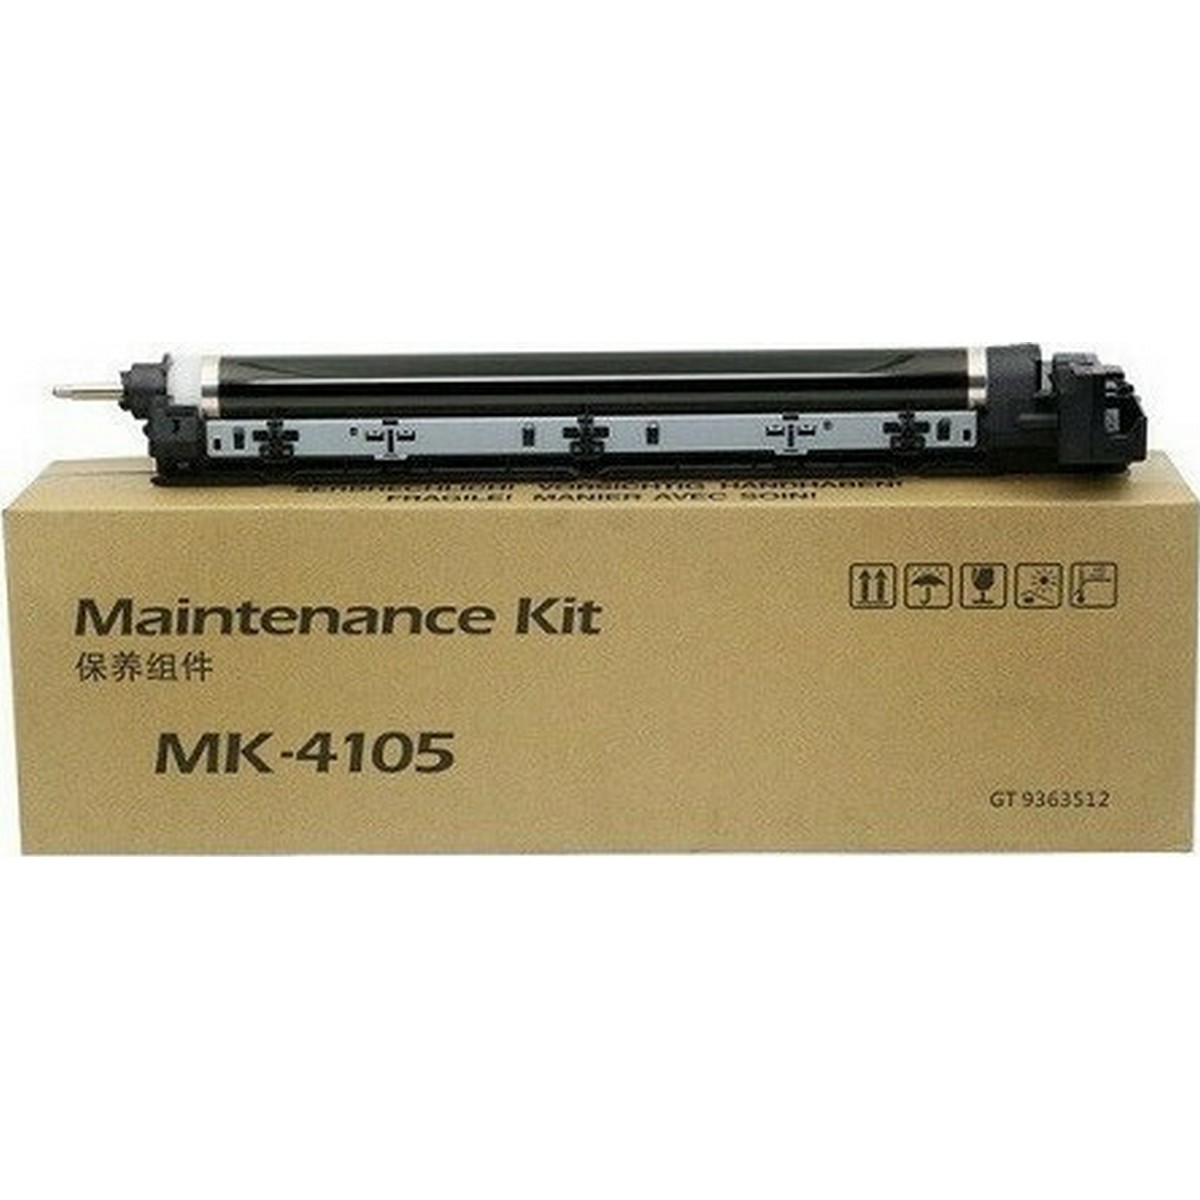 Maintenance Kit Kyocera Mita MK-4105 Black 150k